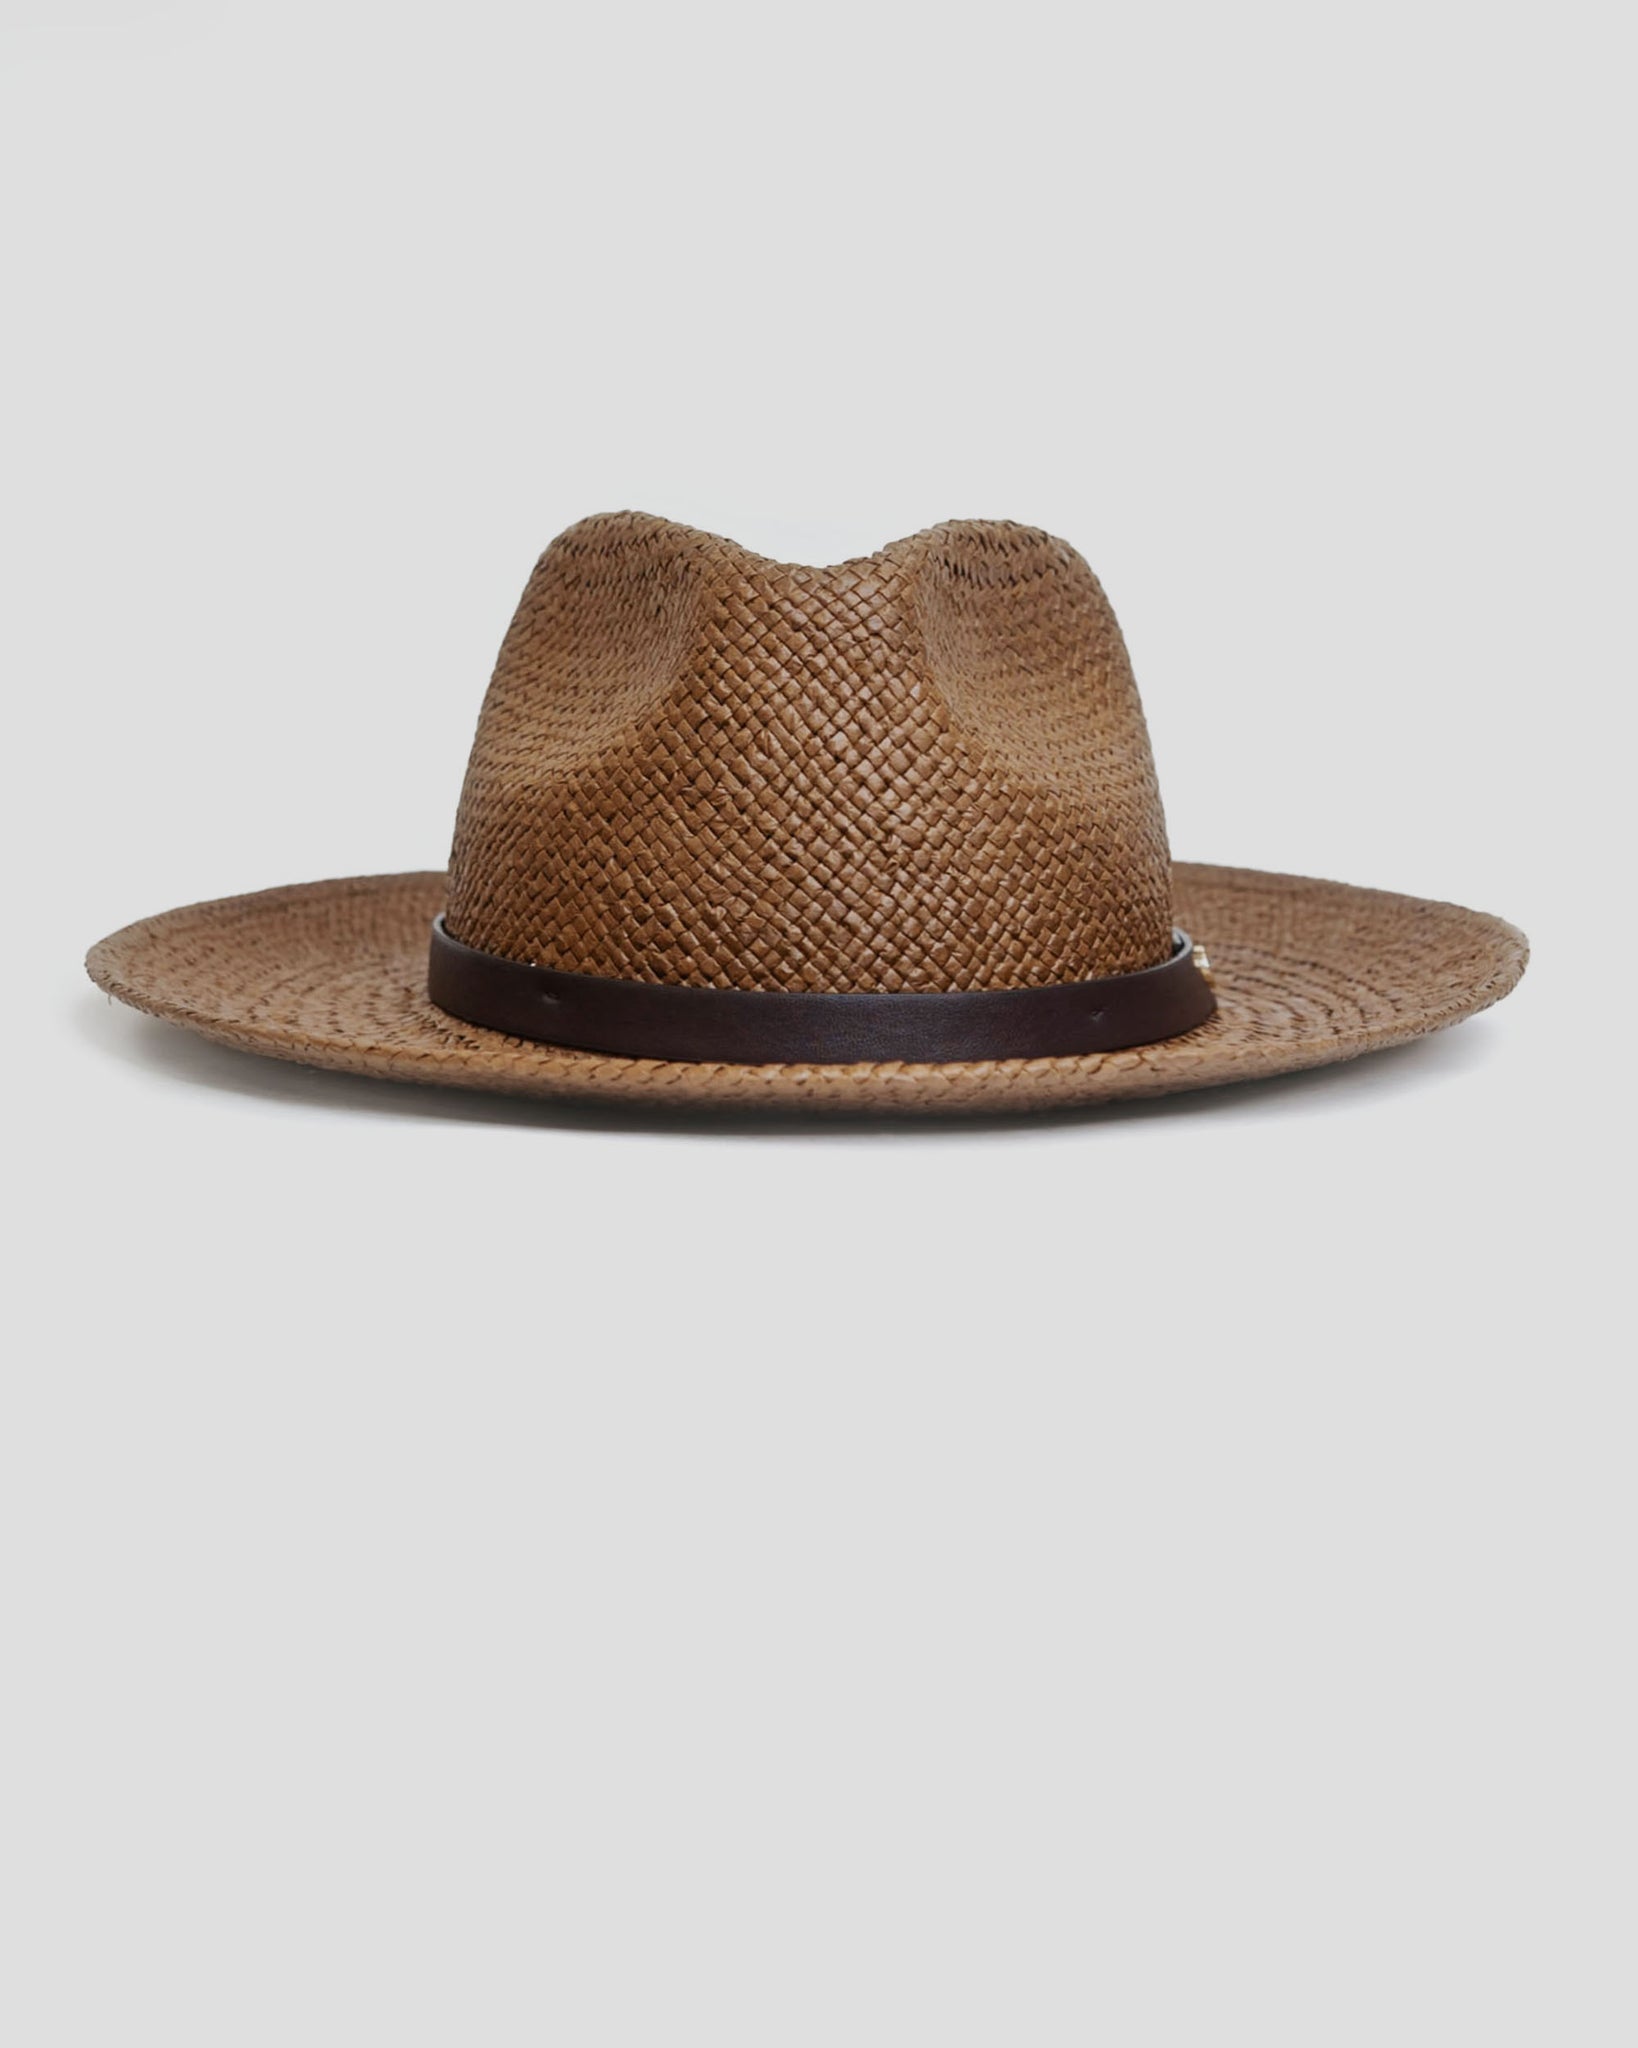 Southern Gents Geoffrey Straw Fedora Hat - Toffee